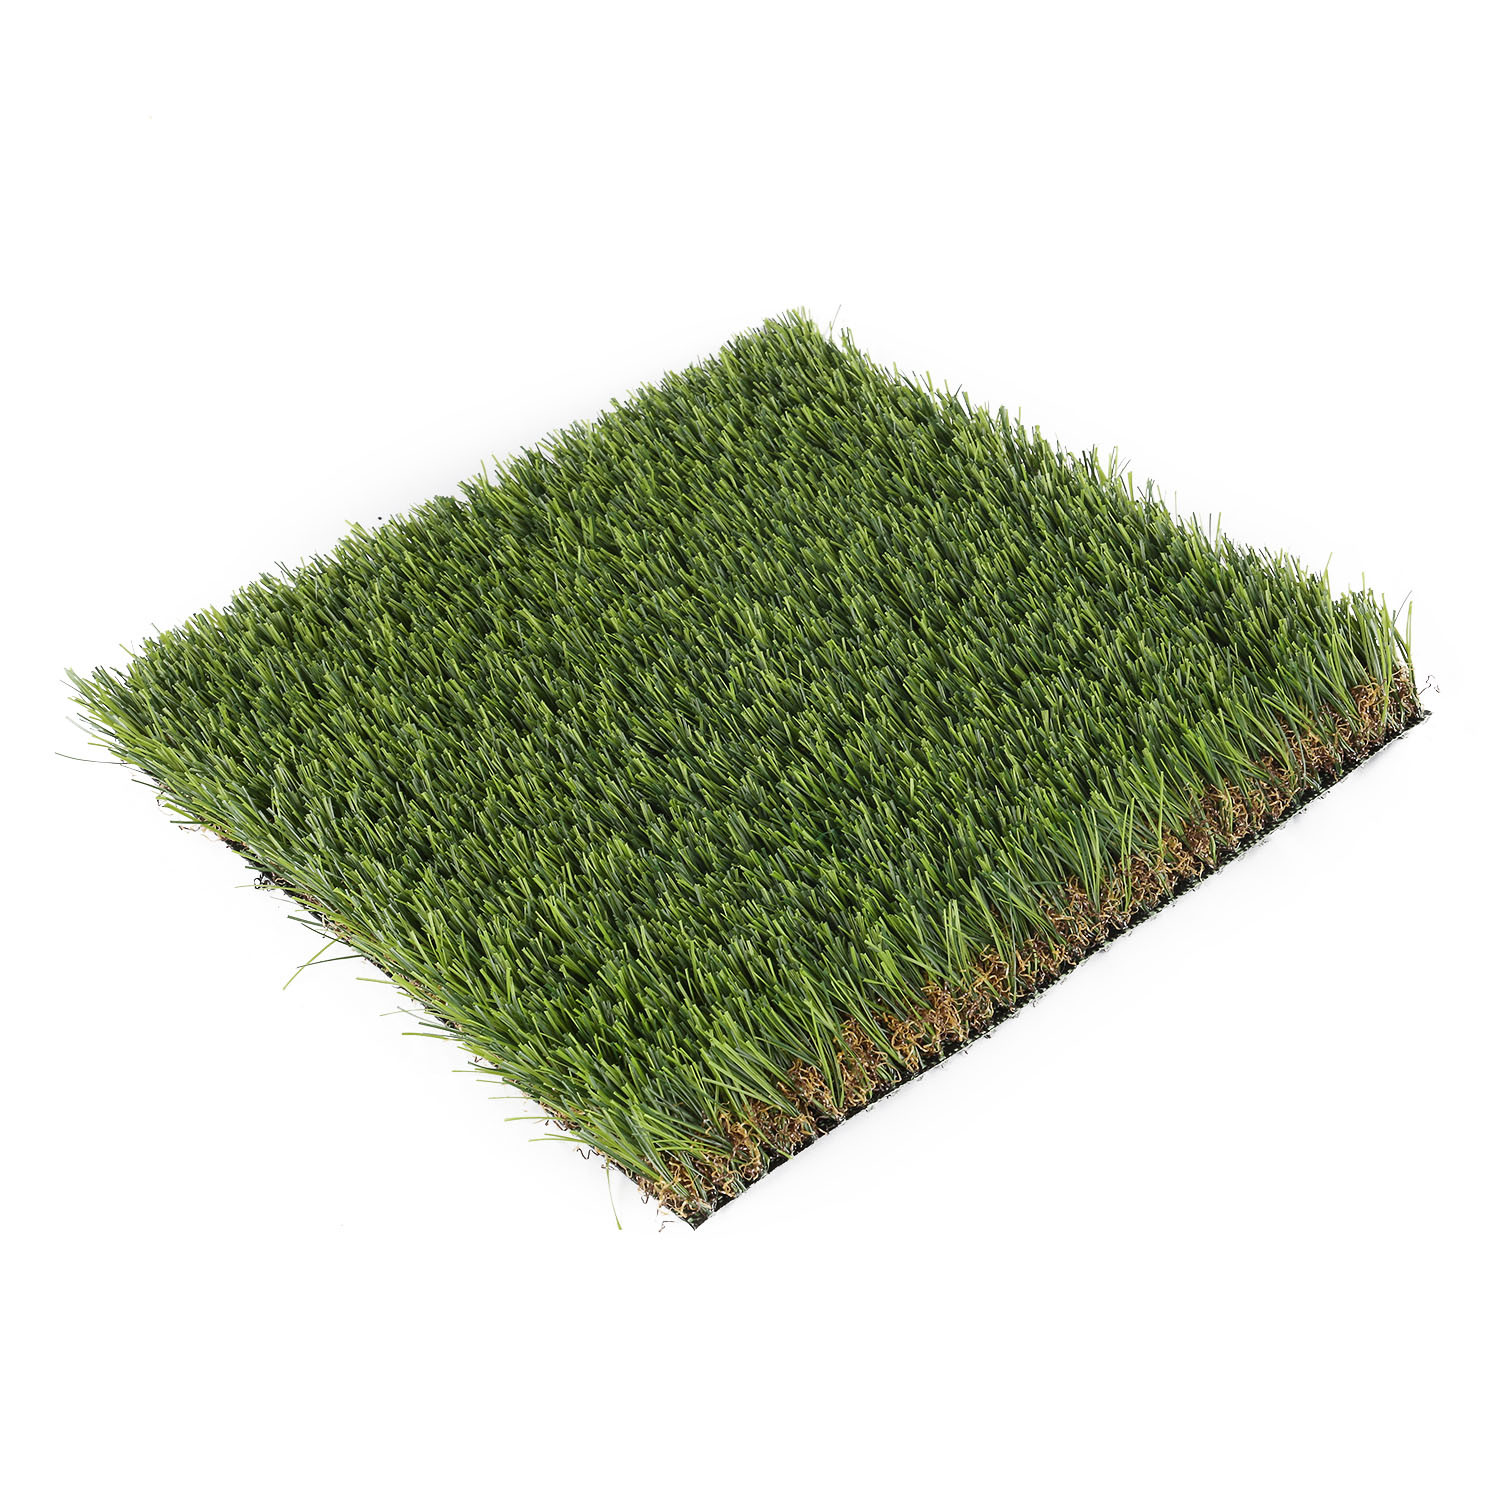 Landscape Grass